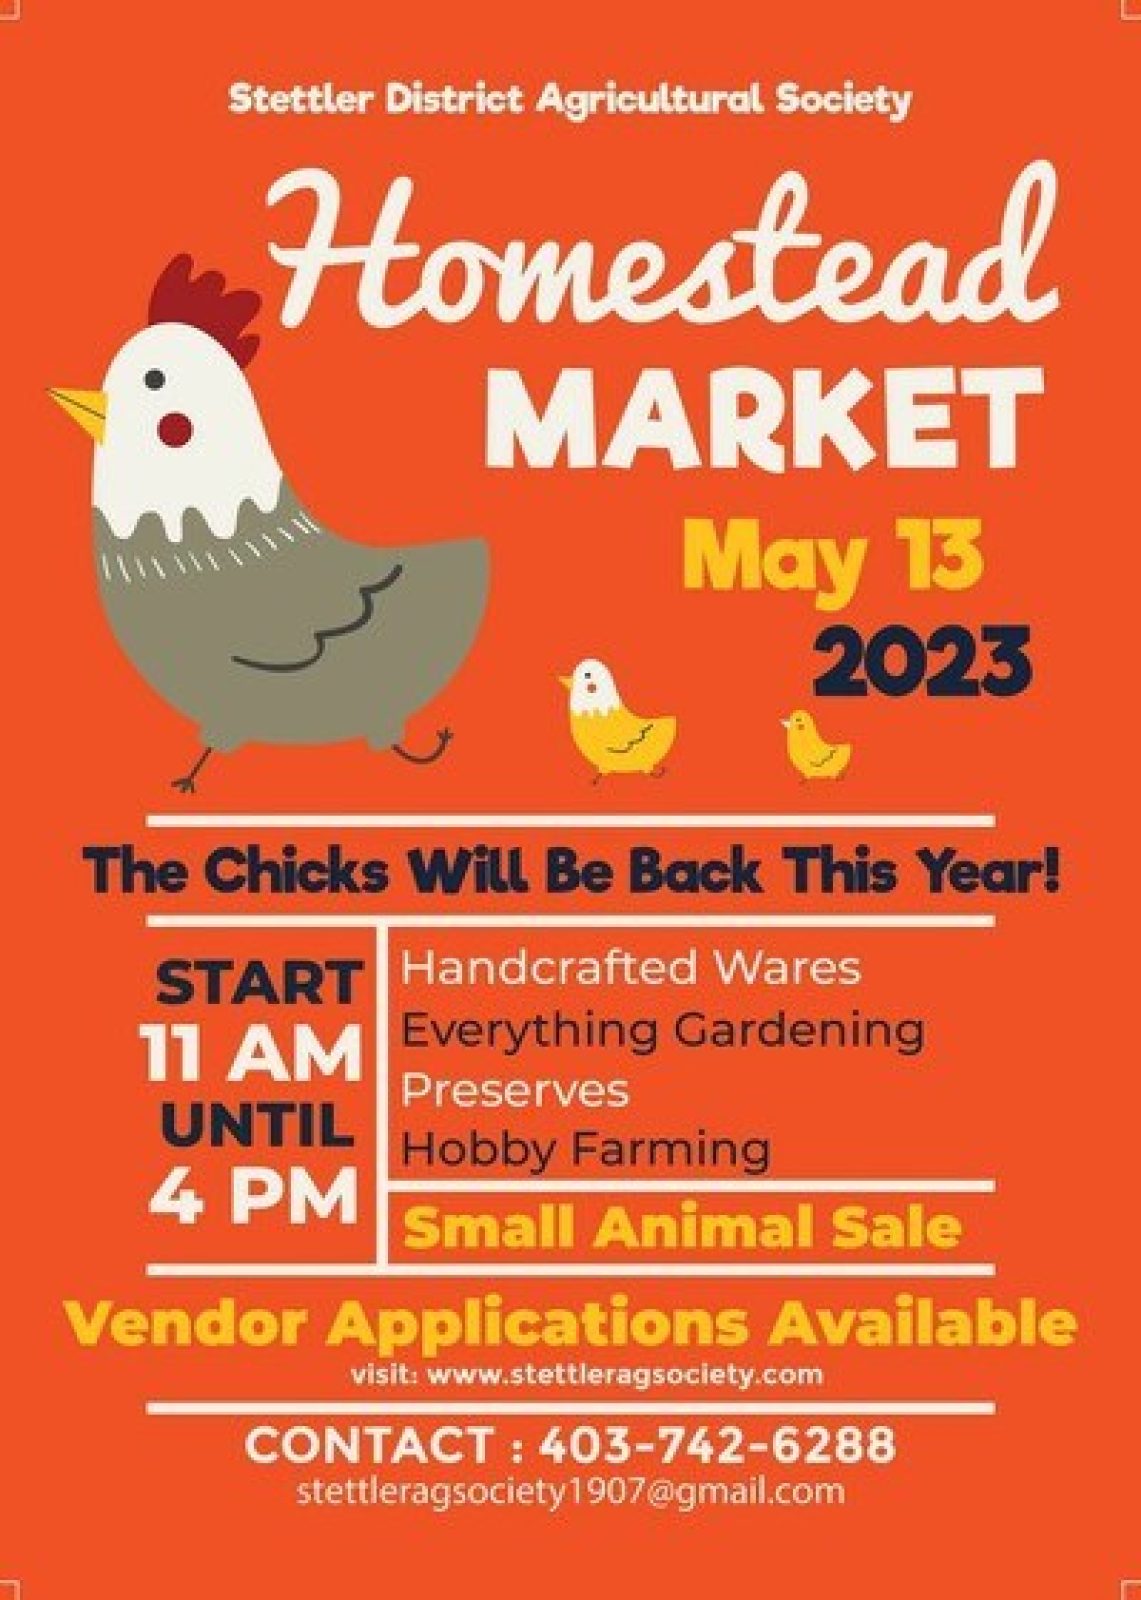 Homestead market